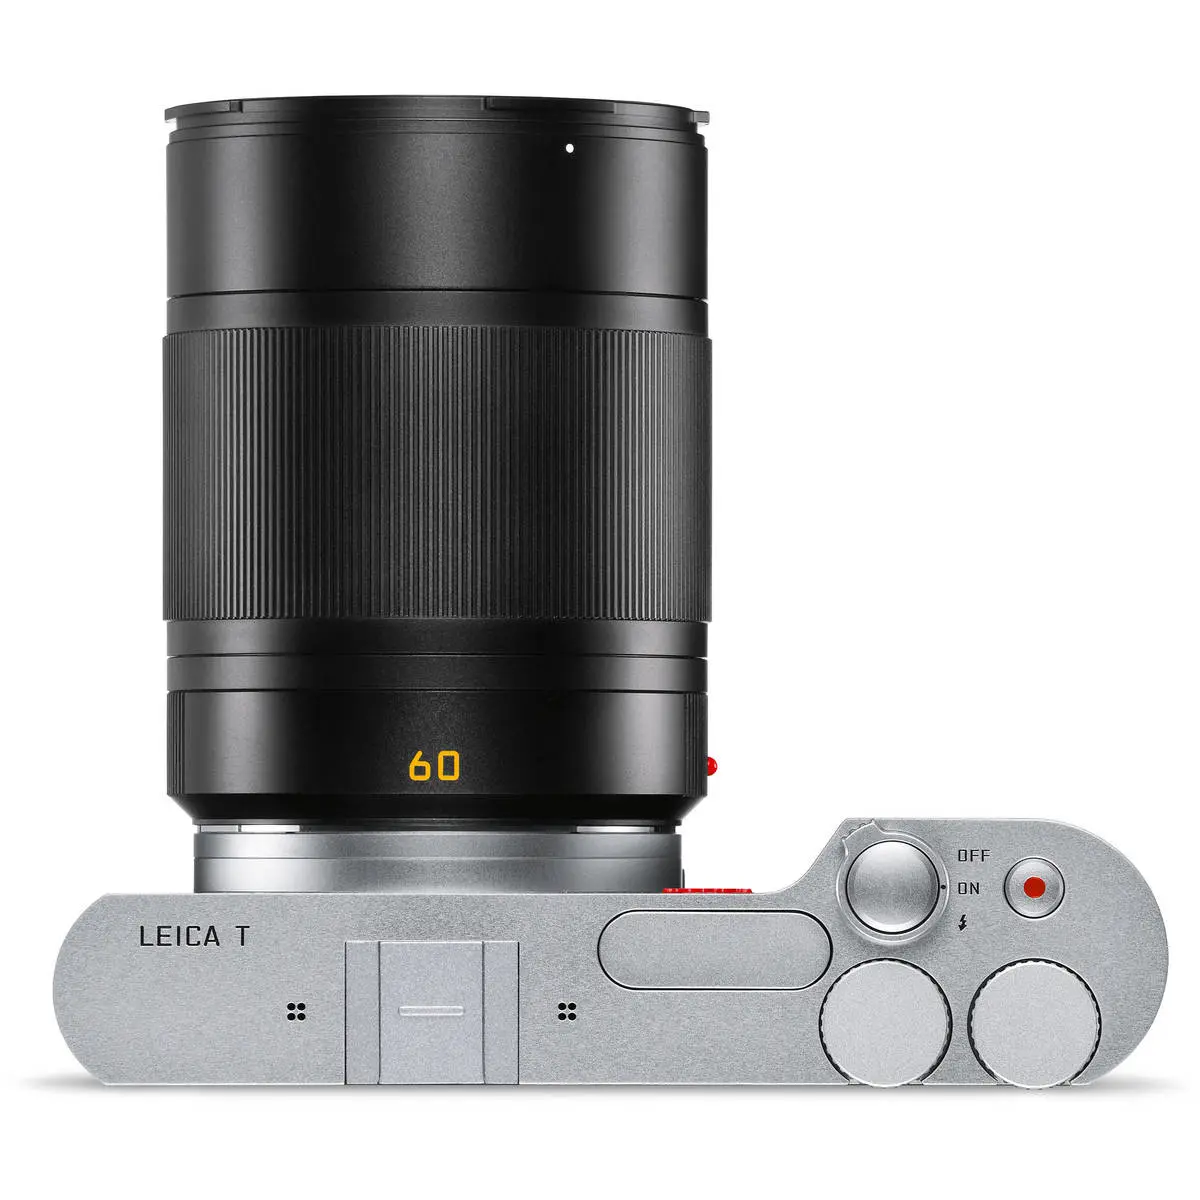 6. Leica APO-Macro-Elmarit-TL 60mm F2.8 ASPH (Black) Lens